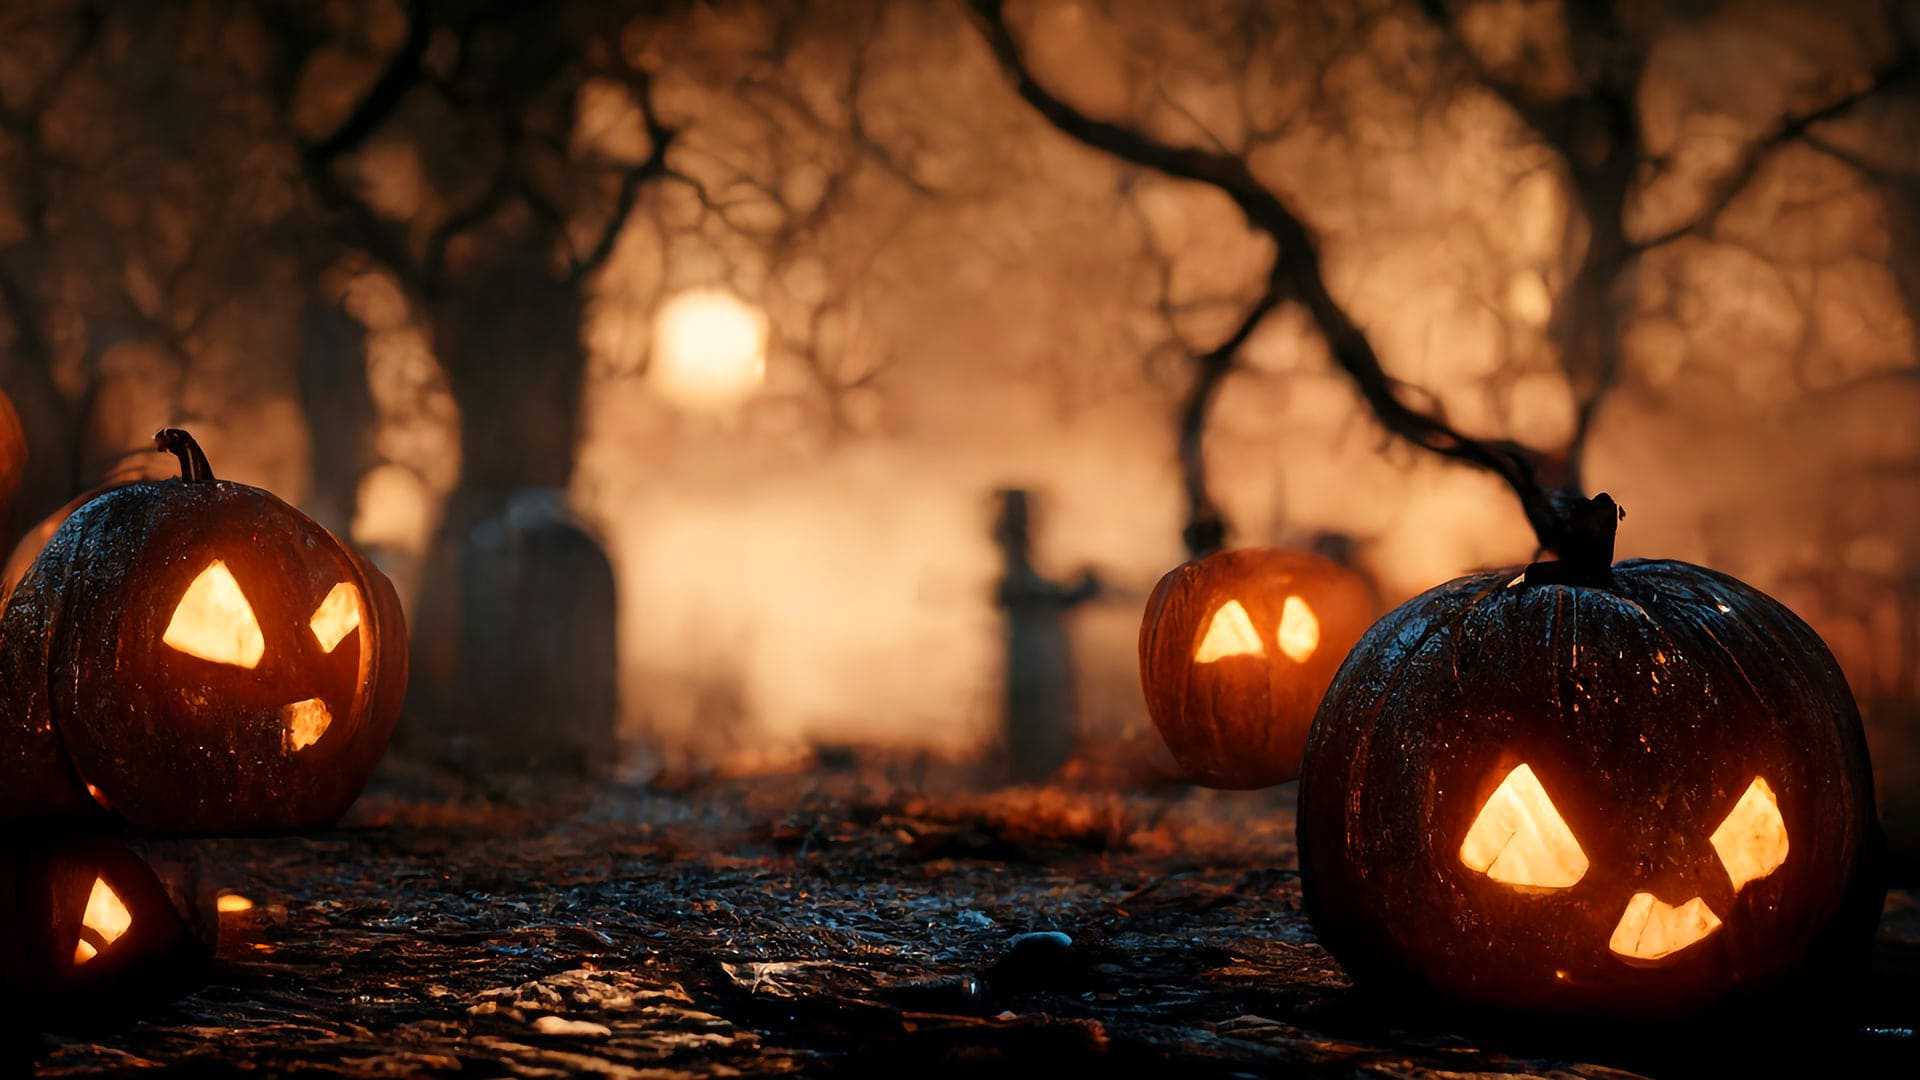 Spooky Halloween Wallpaper - iXpap